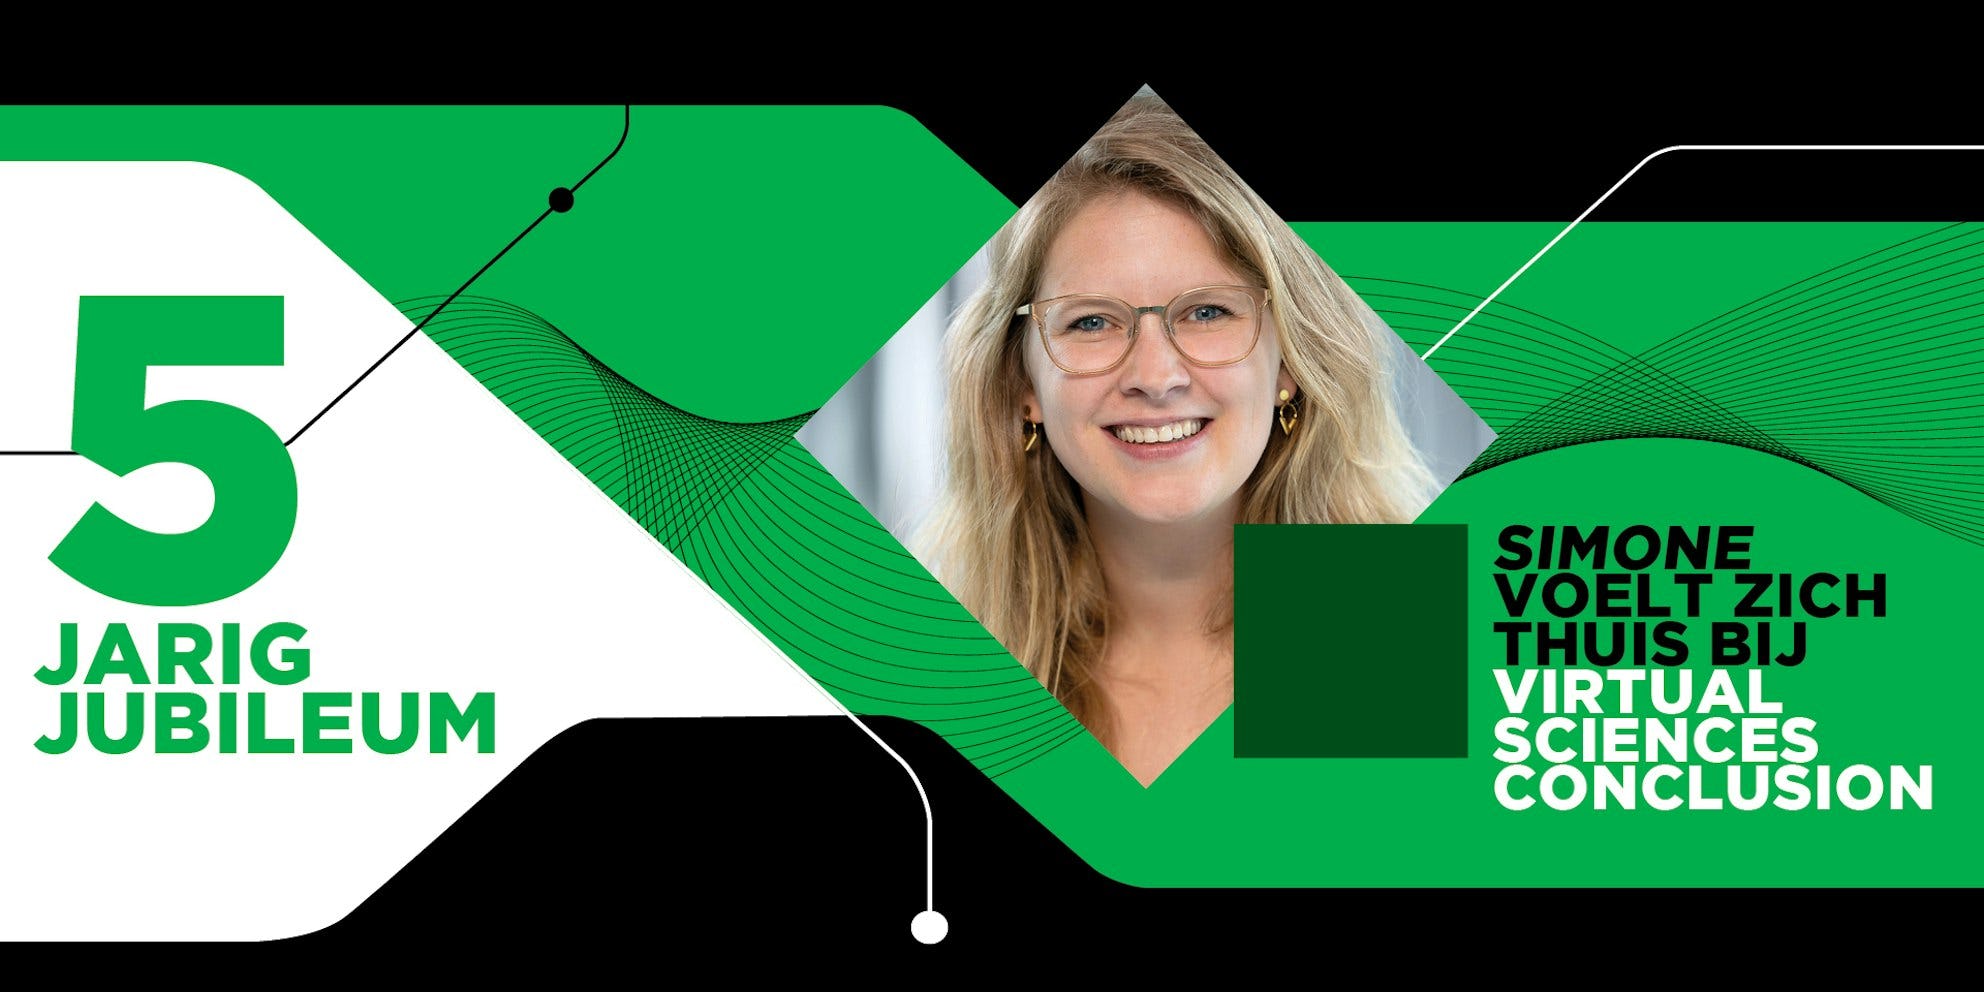 Simone Baudoin 5 jaar bij dé integratiespecialist van Nederland - Virtual Sciences Conclusion